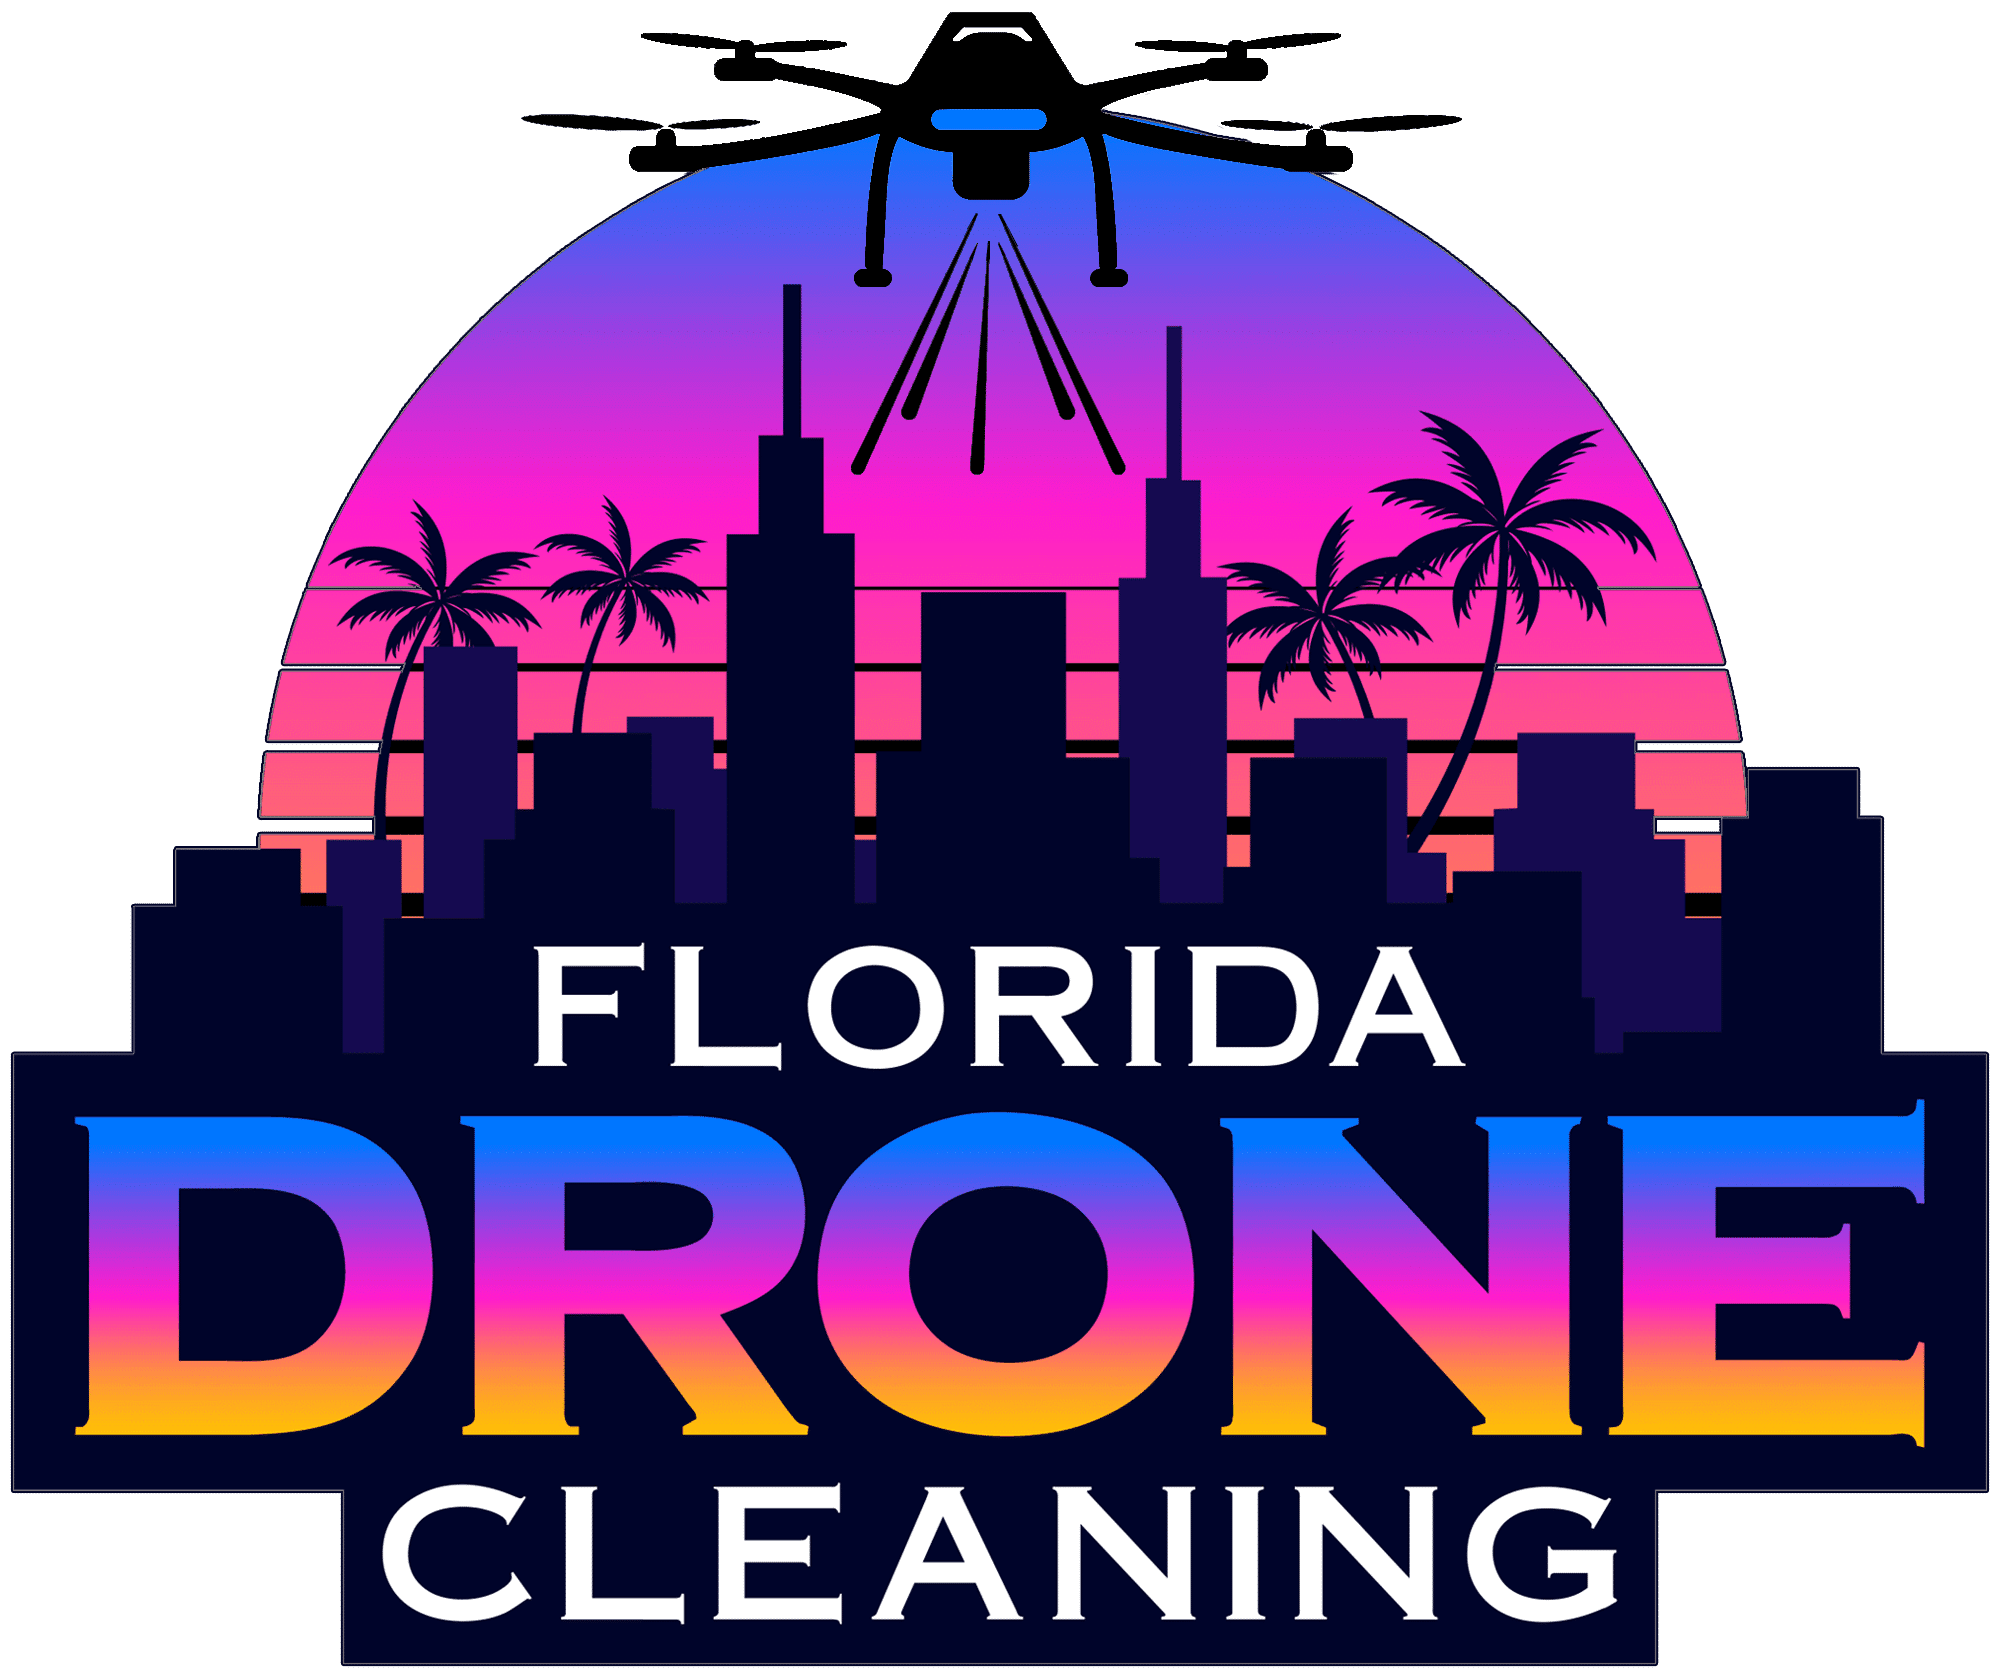 Florida Drone Cleaning Miami FL Company Logo 2